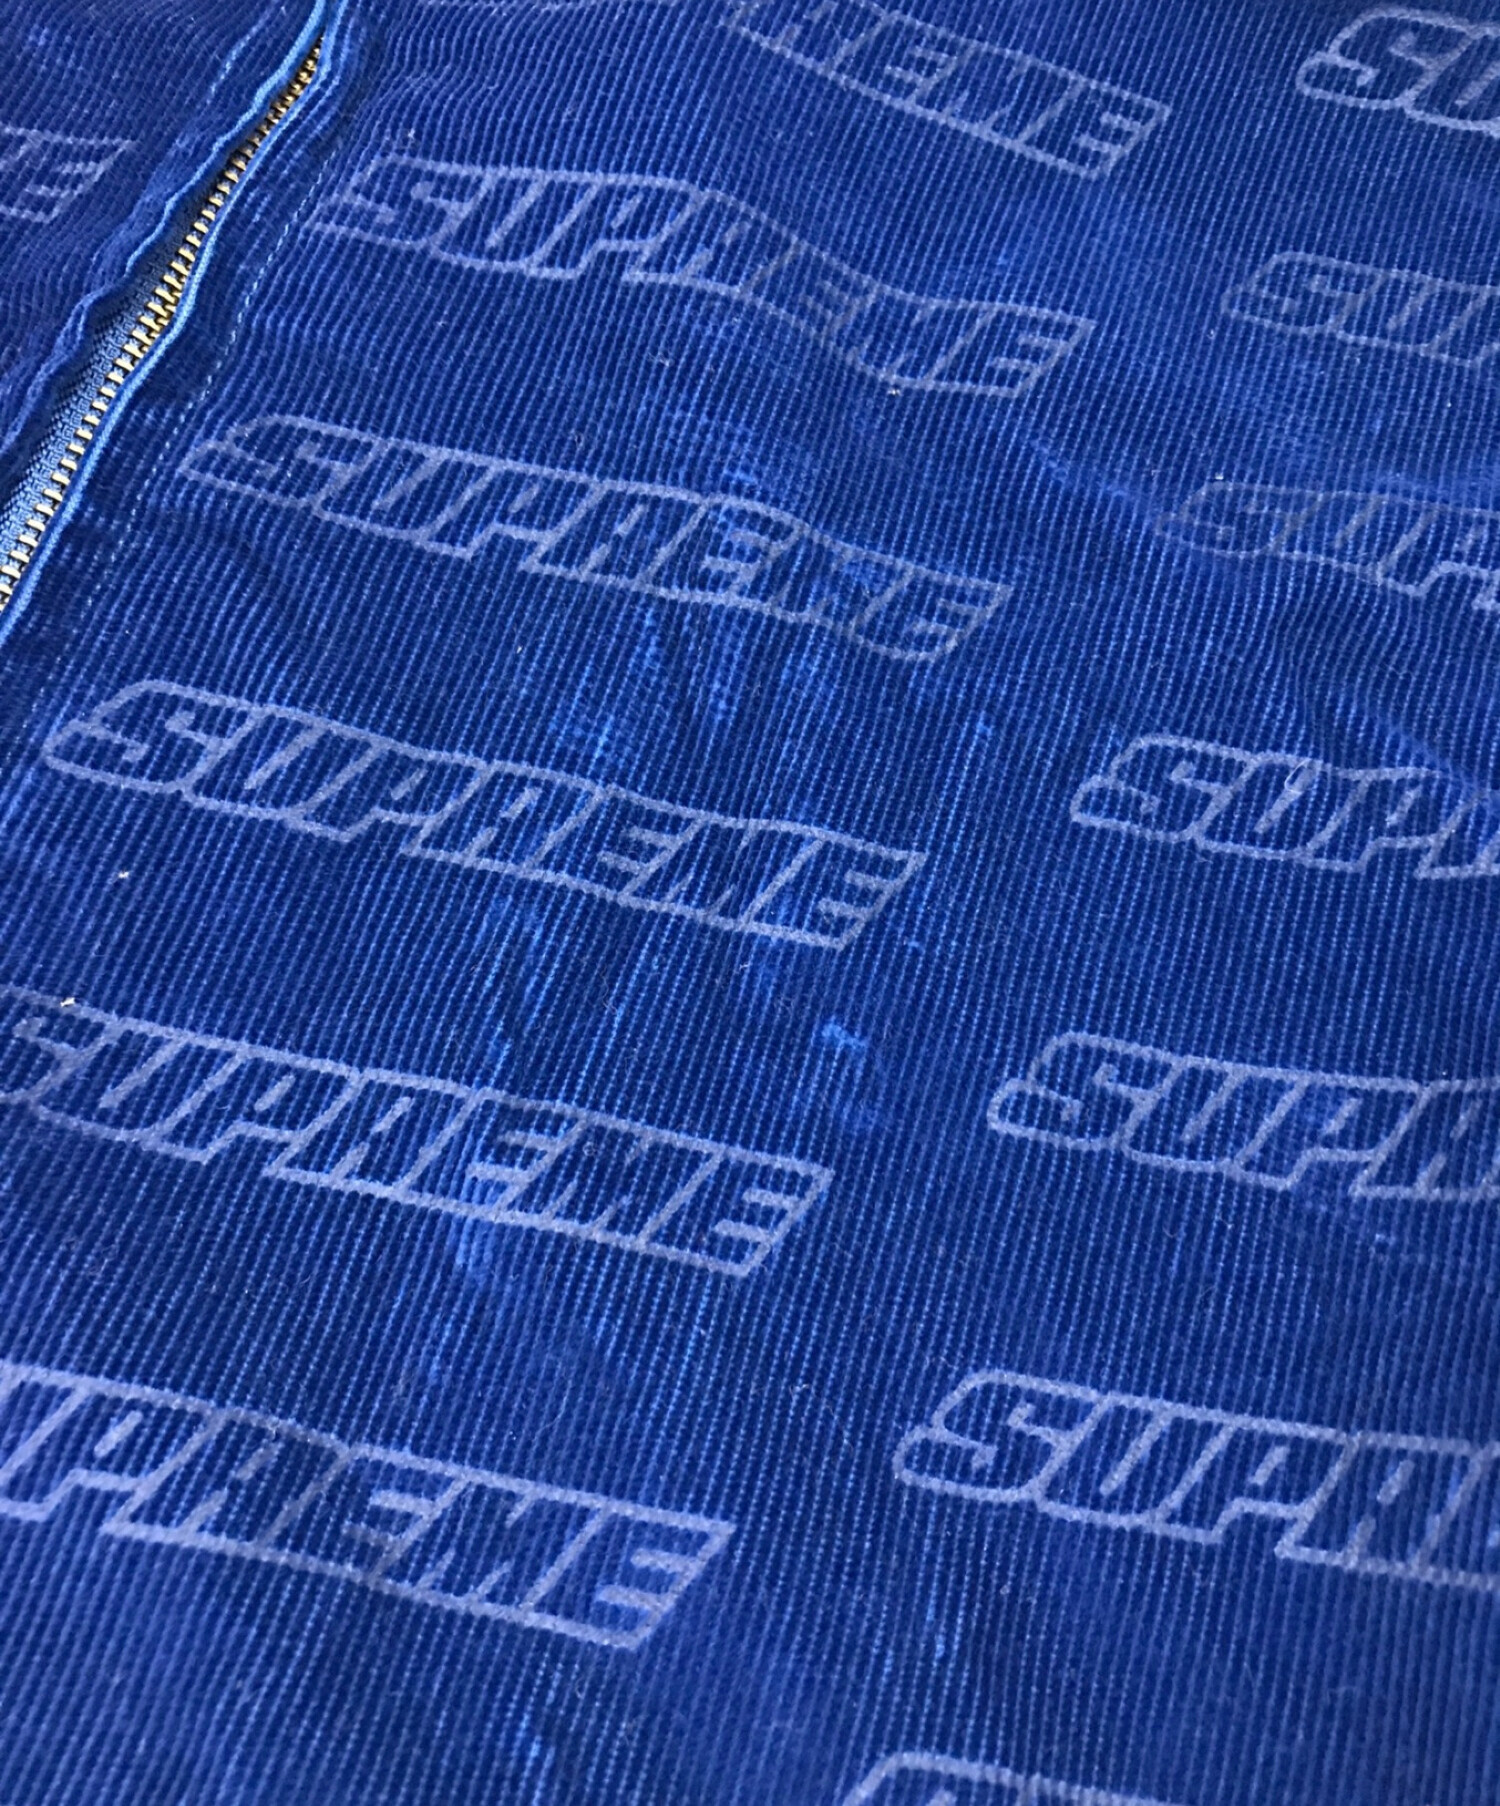 SUPREME (シュプリーム) 18SS Debossed Logo Corduroy Jacket / デボスロゴコーデュロイジャケット ブルー  サイズ:M